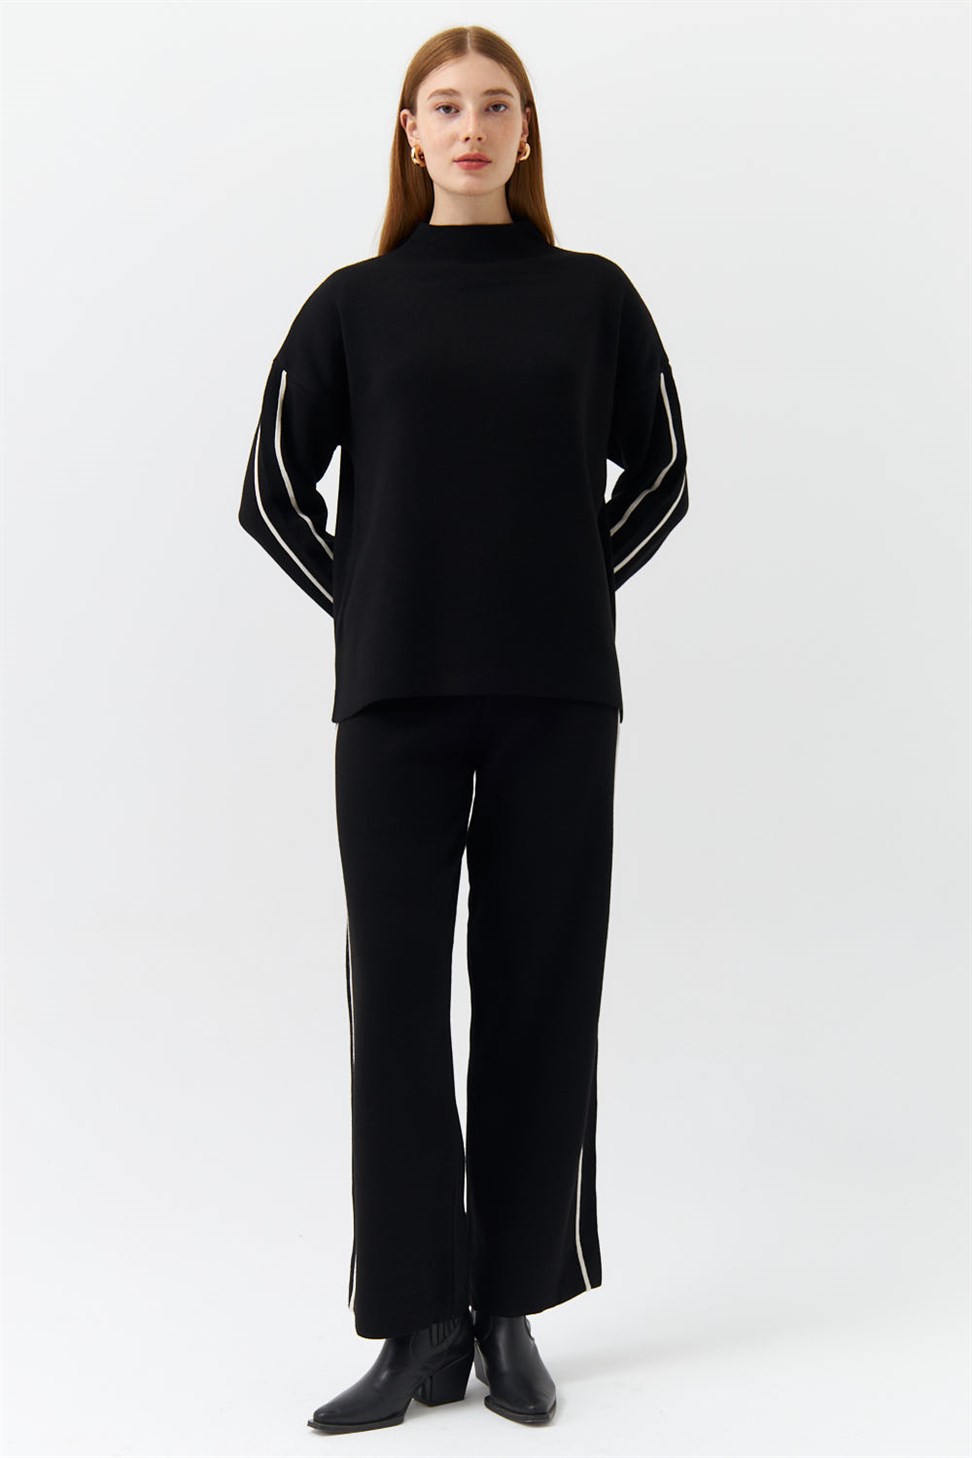 Stand Up Collar Stripe Detailed Black Womens Knitwear Set